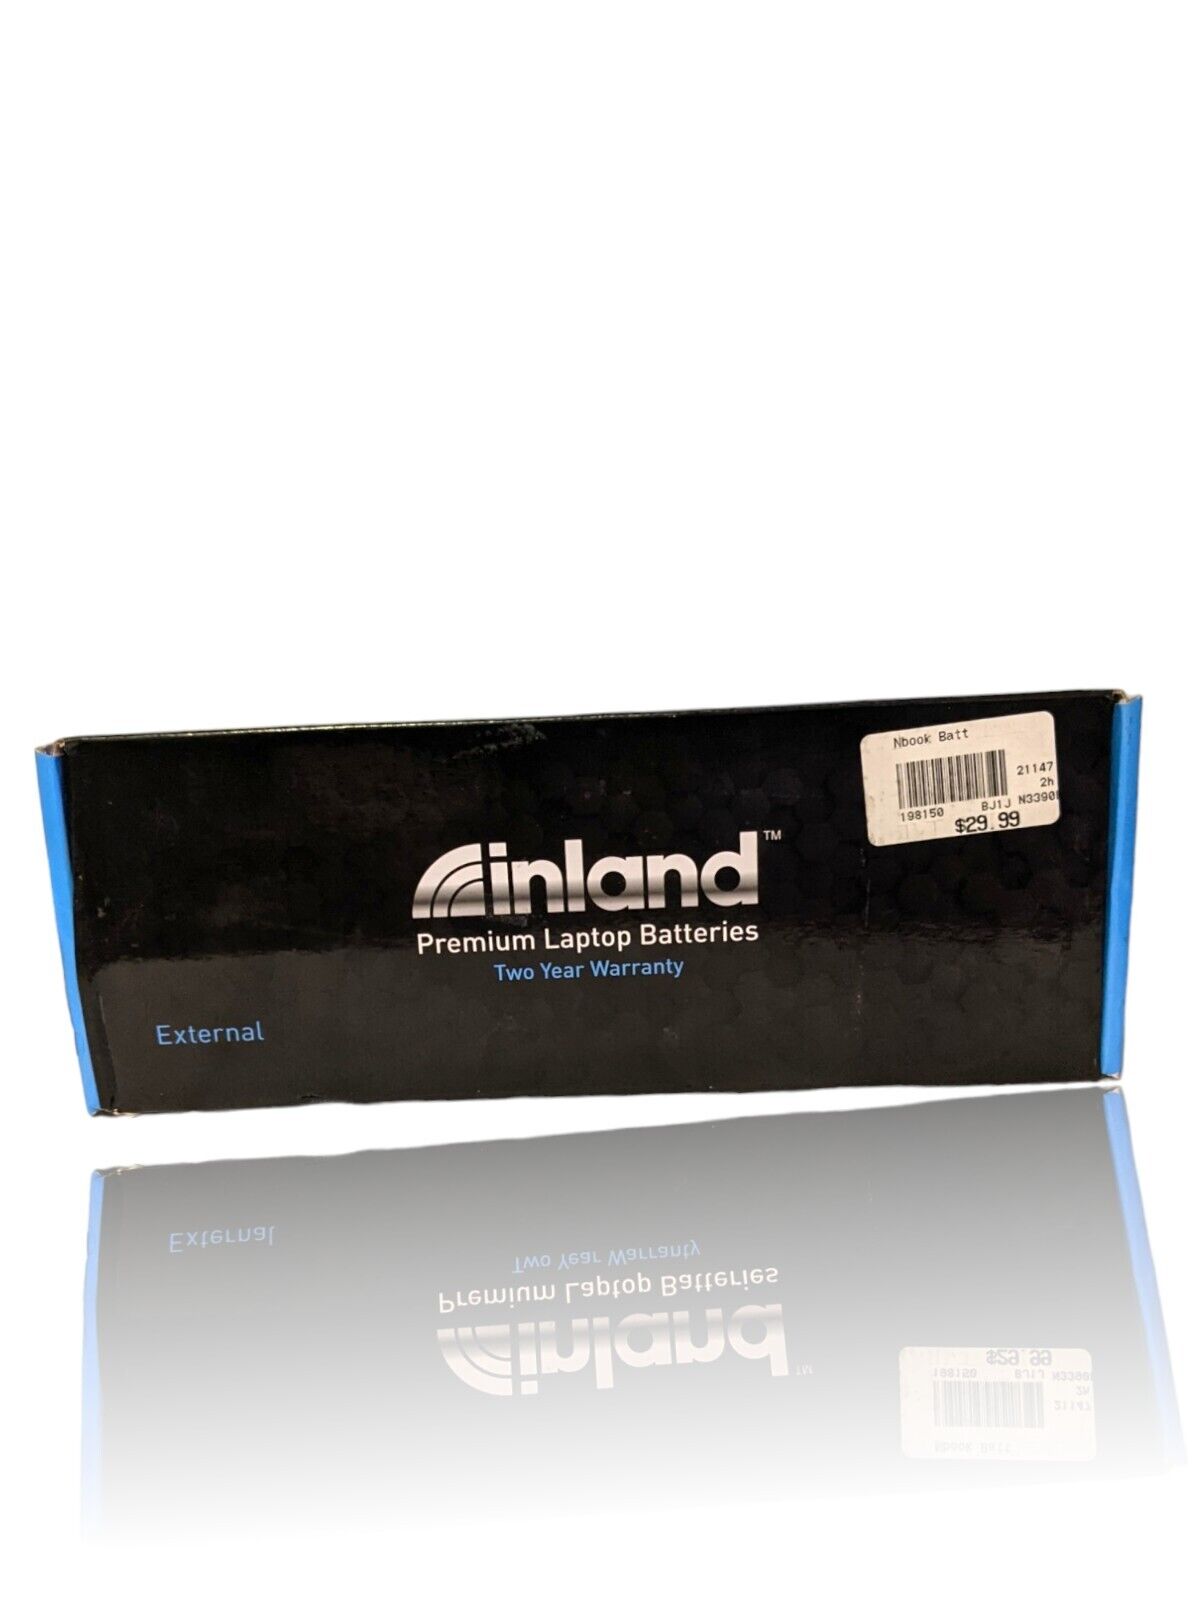 Inland Premium External Laptop Battery, 11.1V, 5800mAh/64Wh